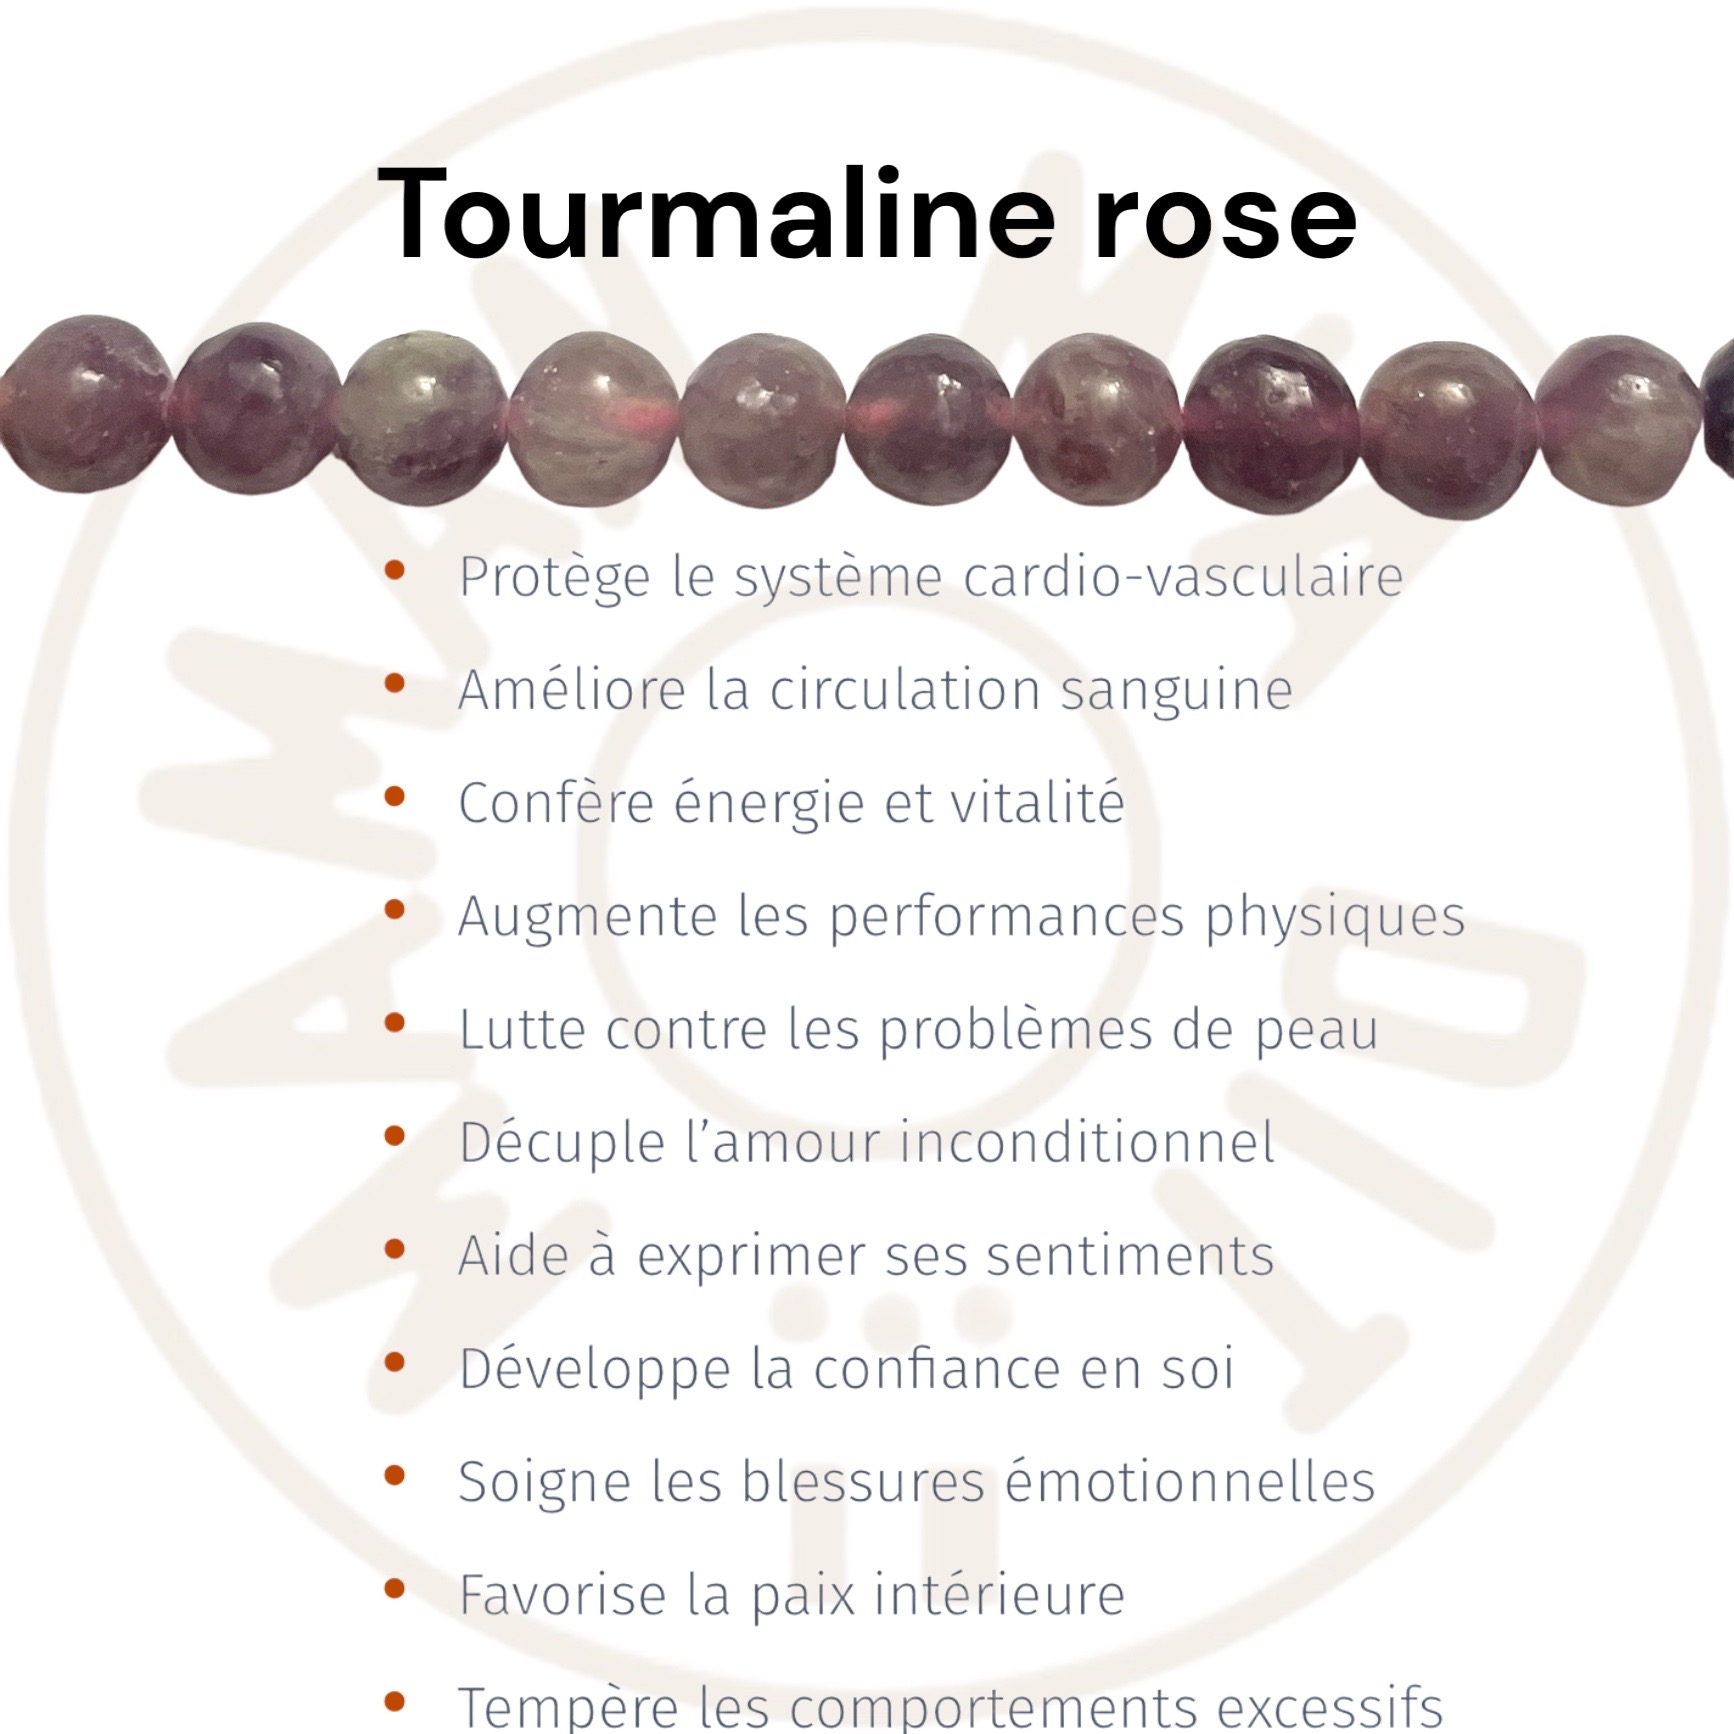 tourmaline-rose-vertus.jpg